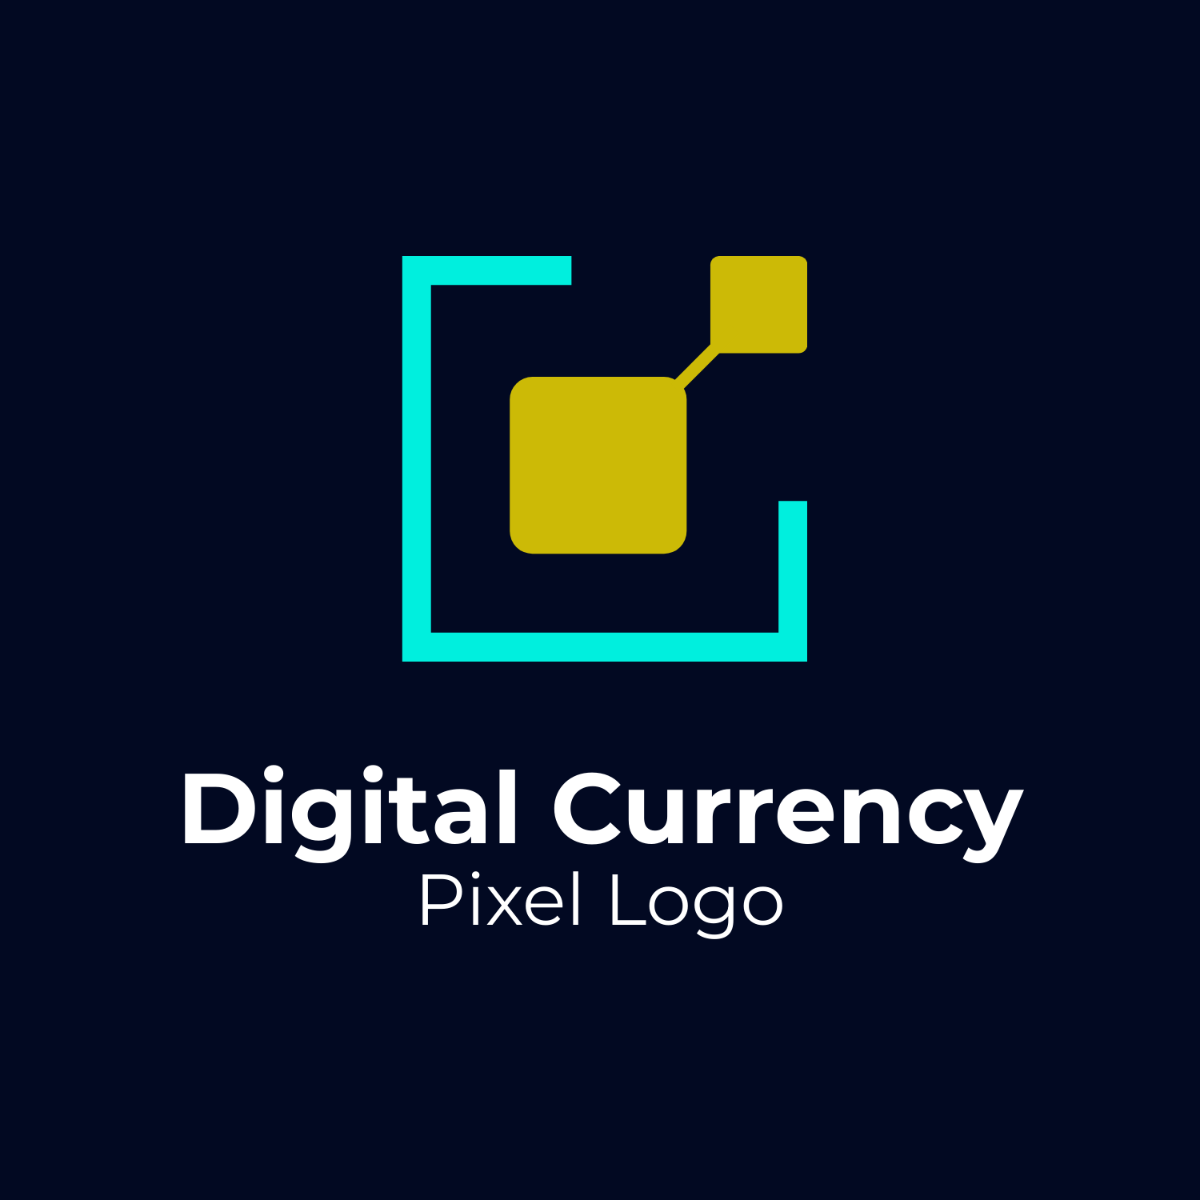 Digital Currency Pixel Logo Template